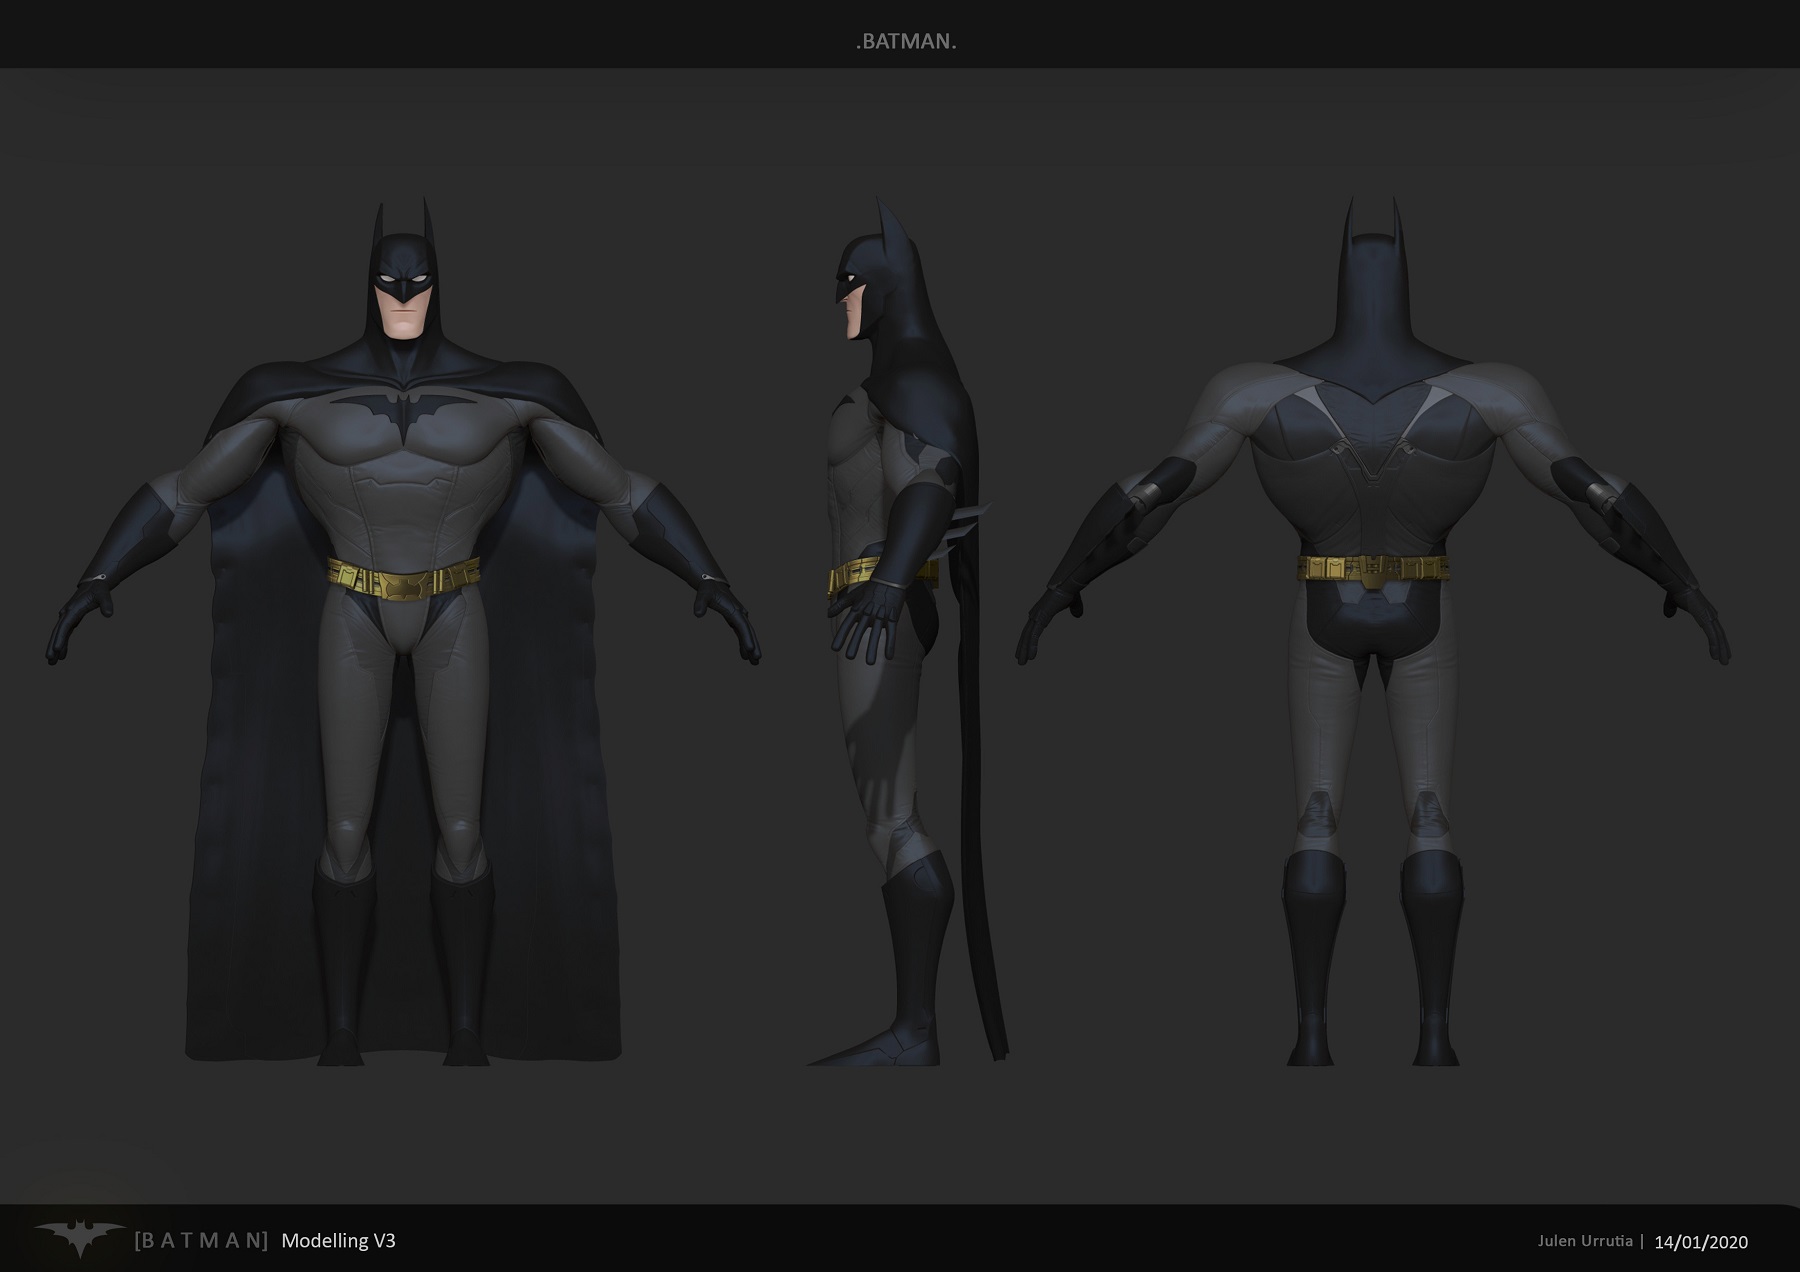 Julen Urrutia artista digital reimagina Batman atraves de computacao grafica 11